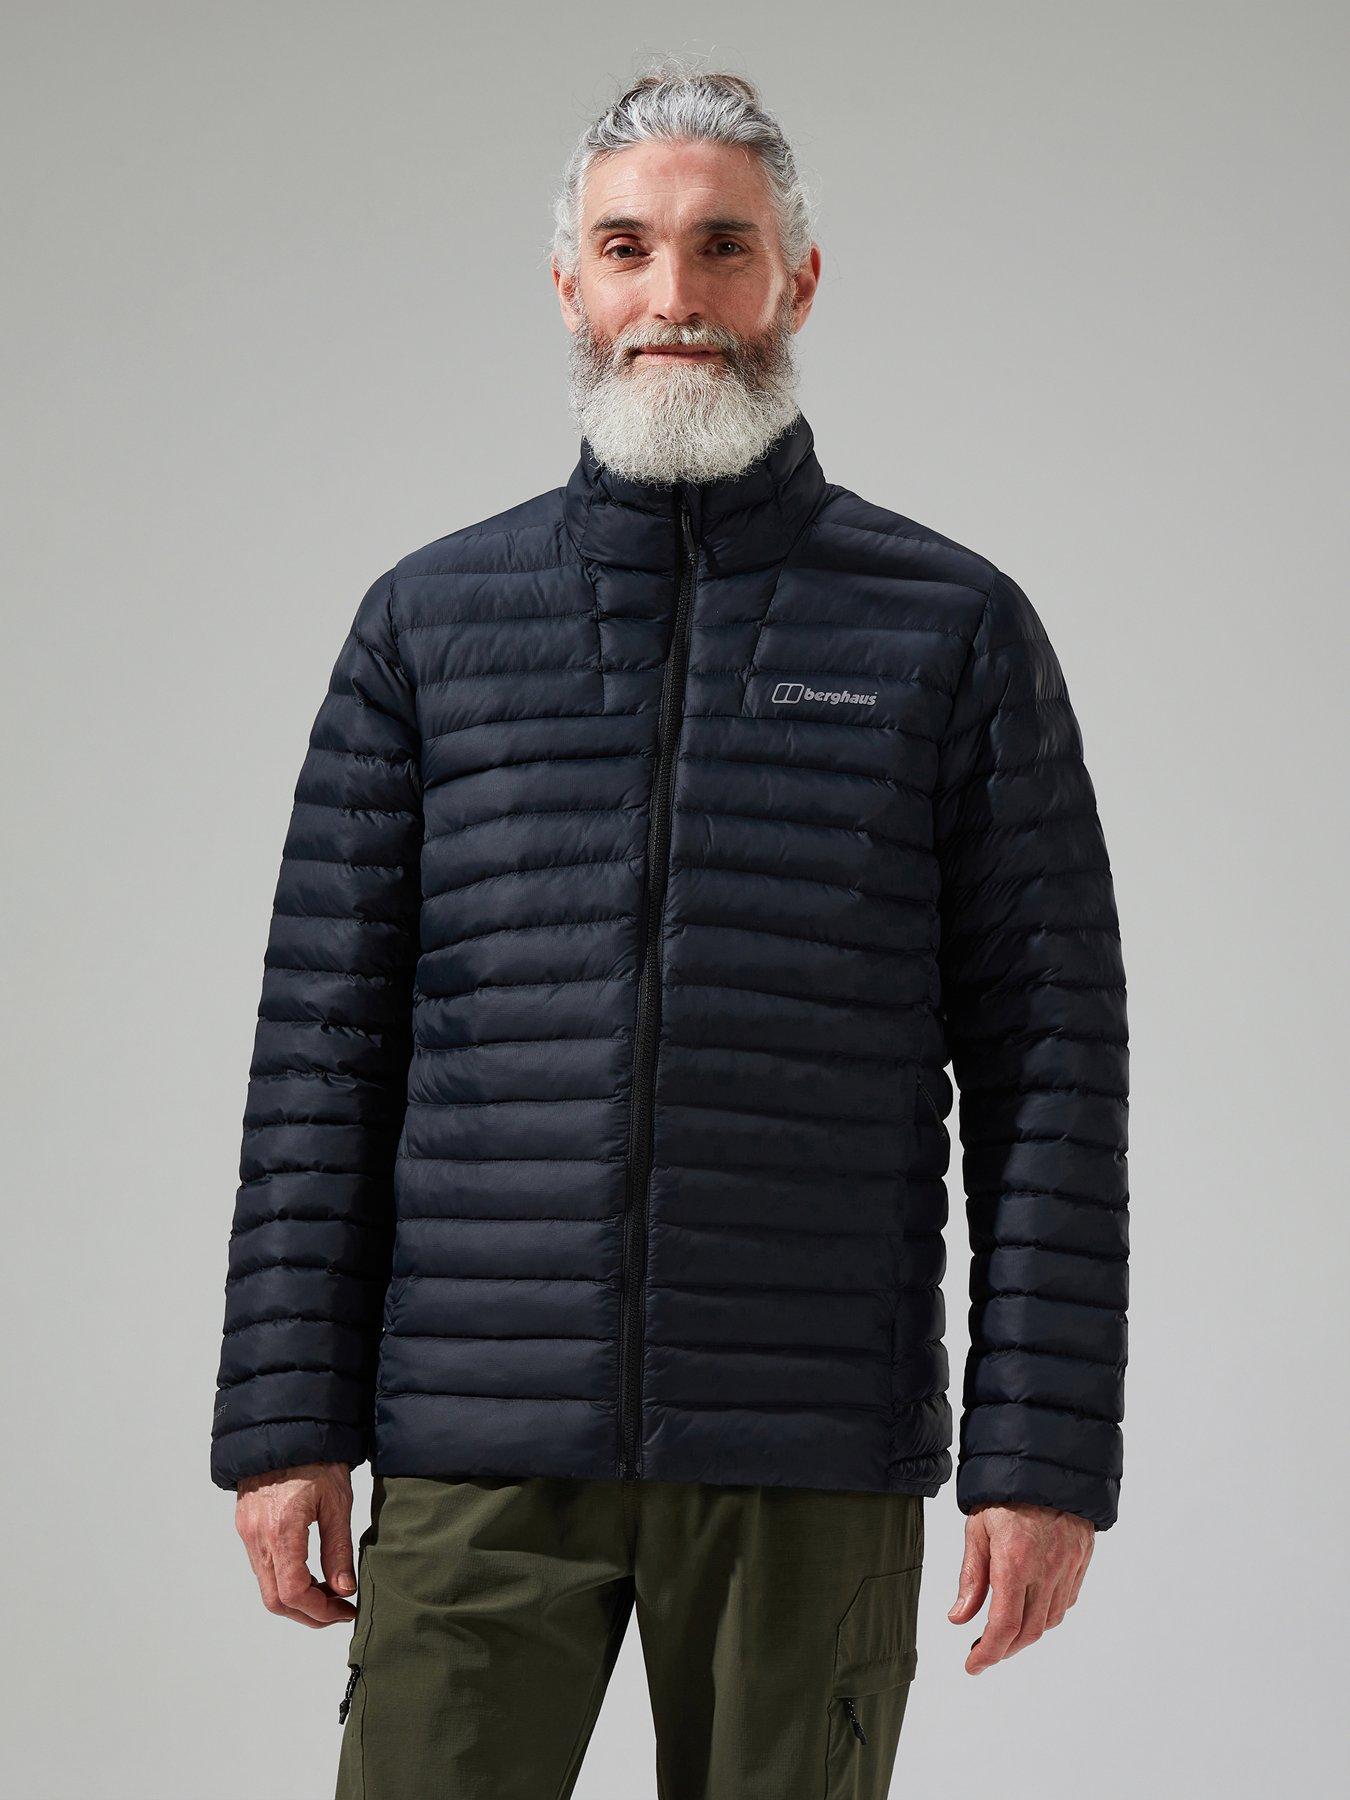 Berghaus Vaskye Men's Insulated Jacket at John Lewis & Partners